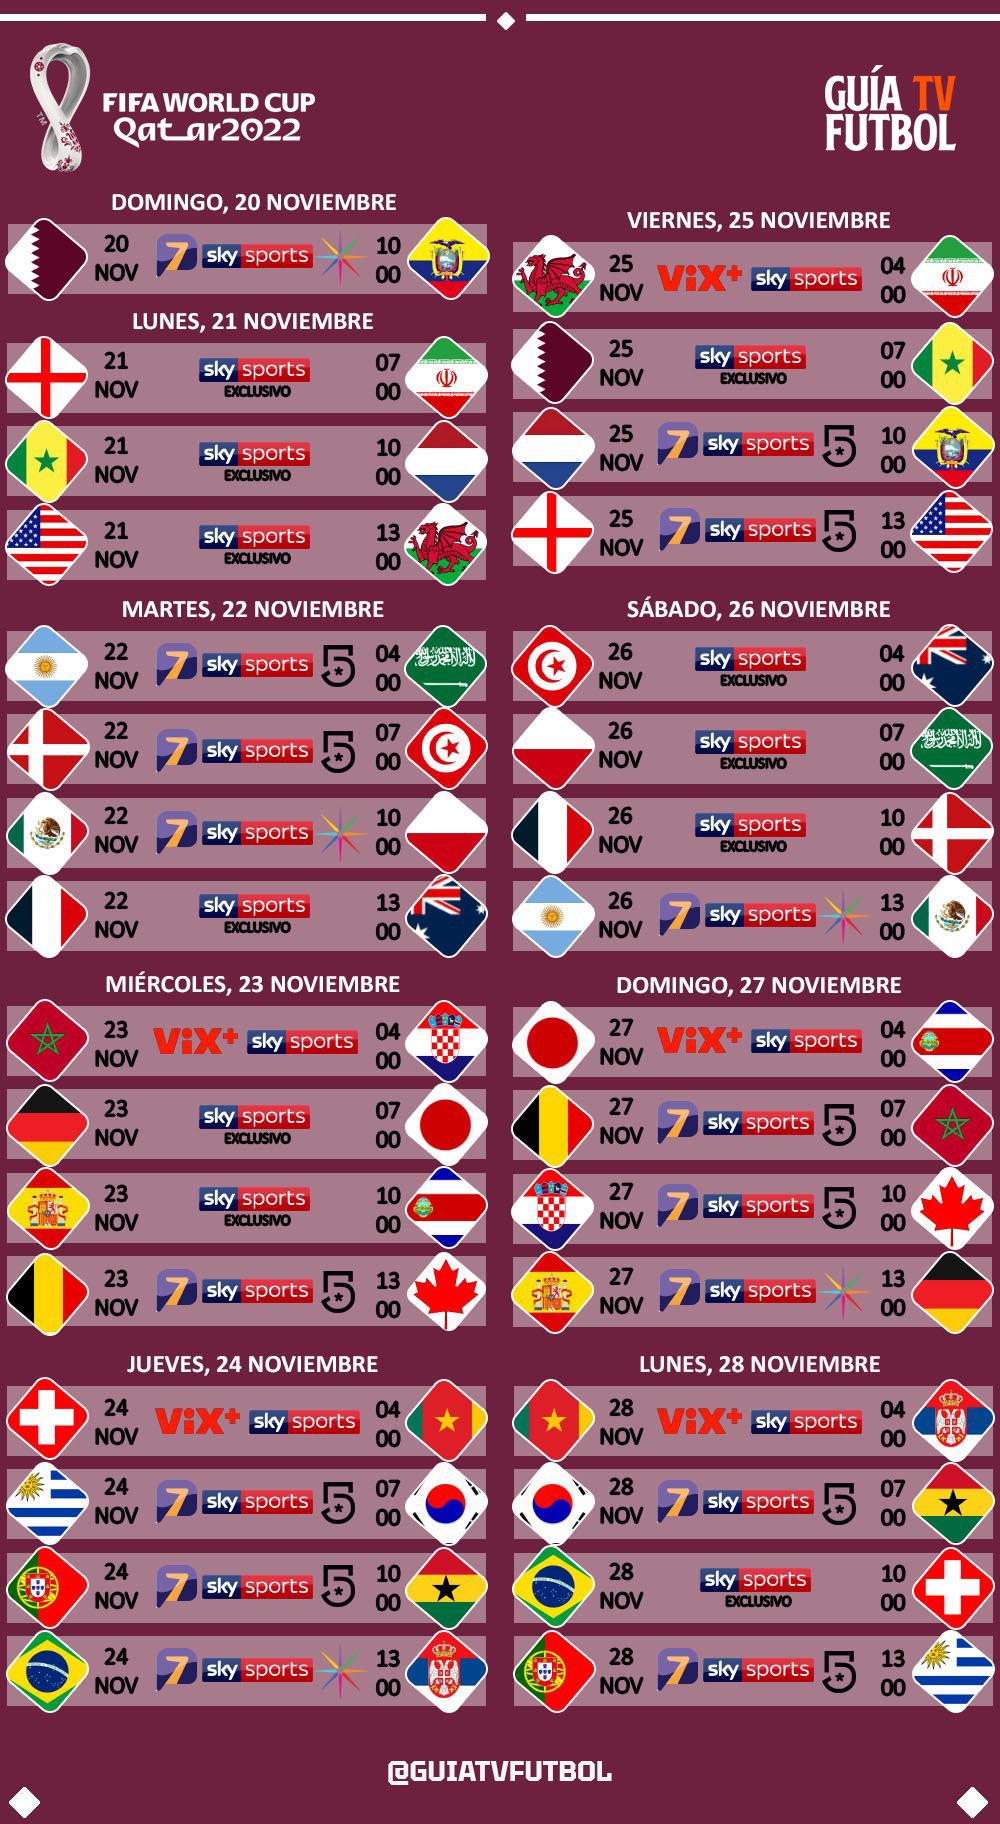 Agenda TV: Mundial Qatar 2022 - Fútbol En Vivo - Guía TV Liga MX